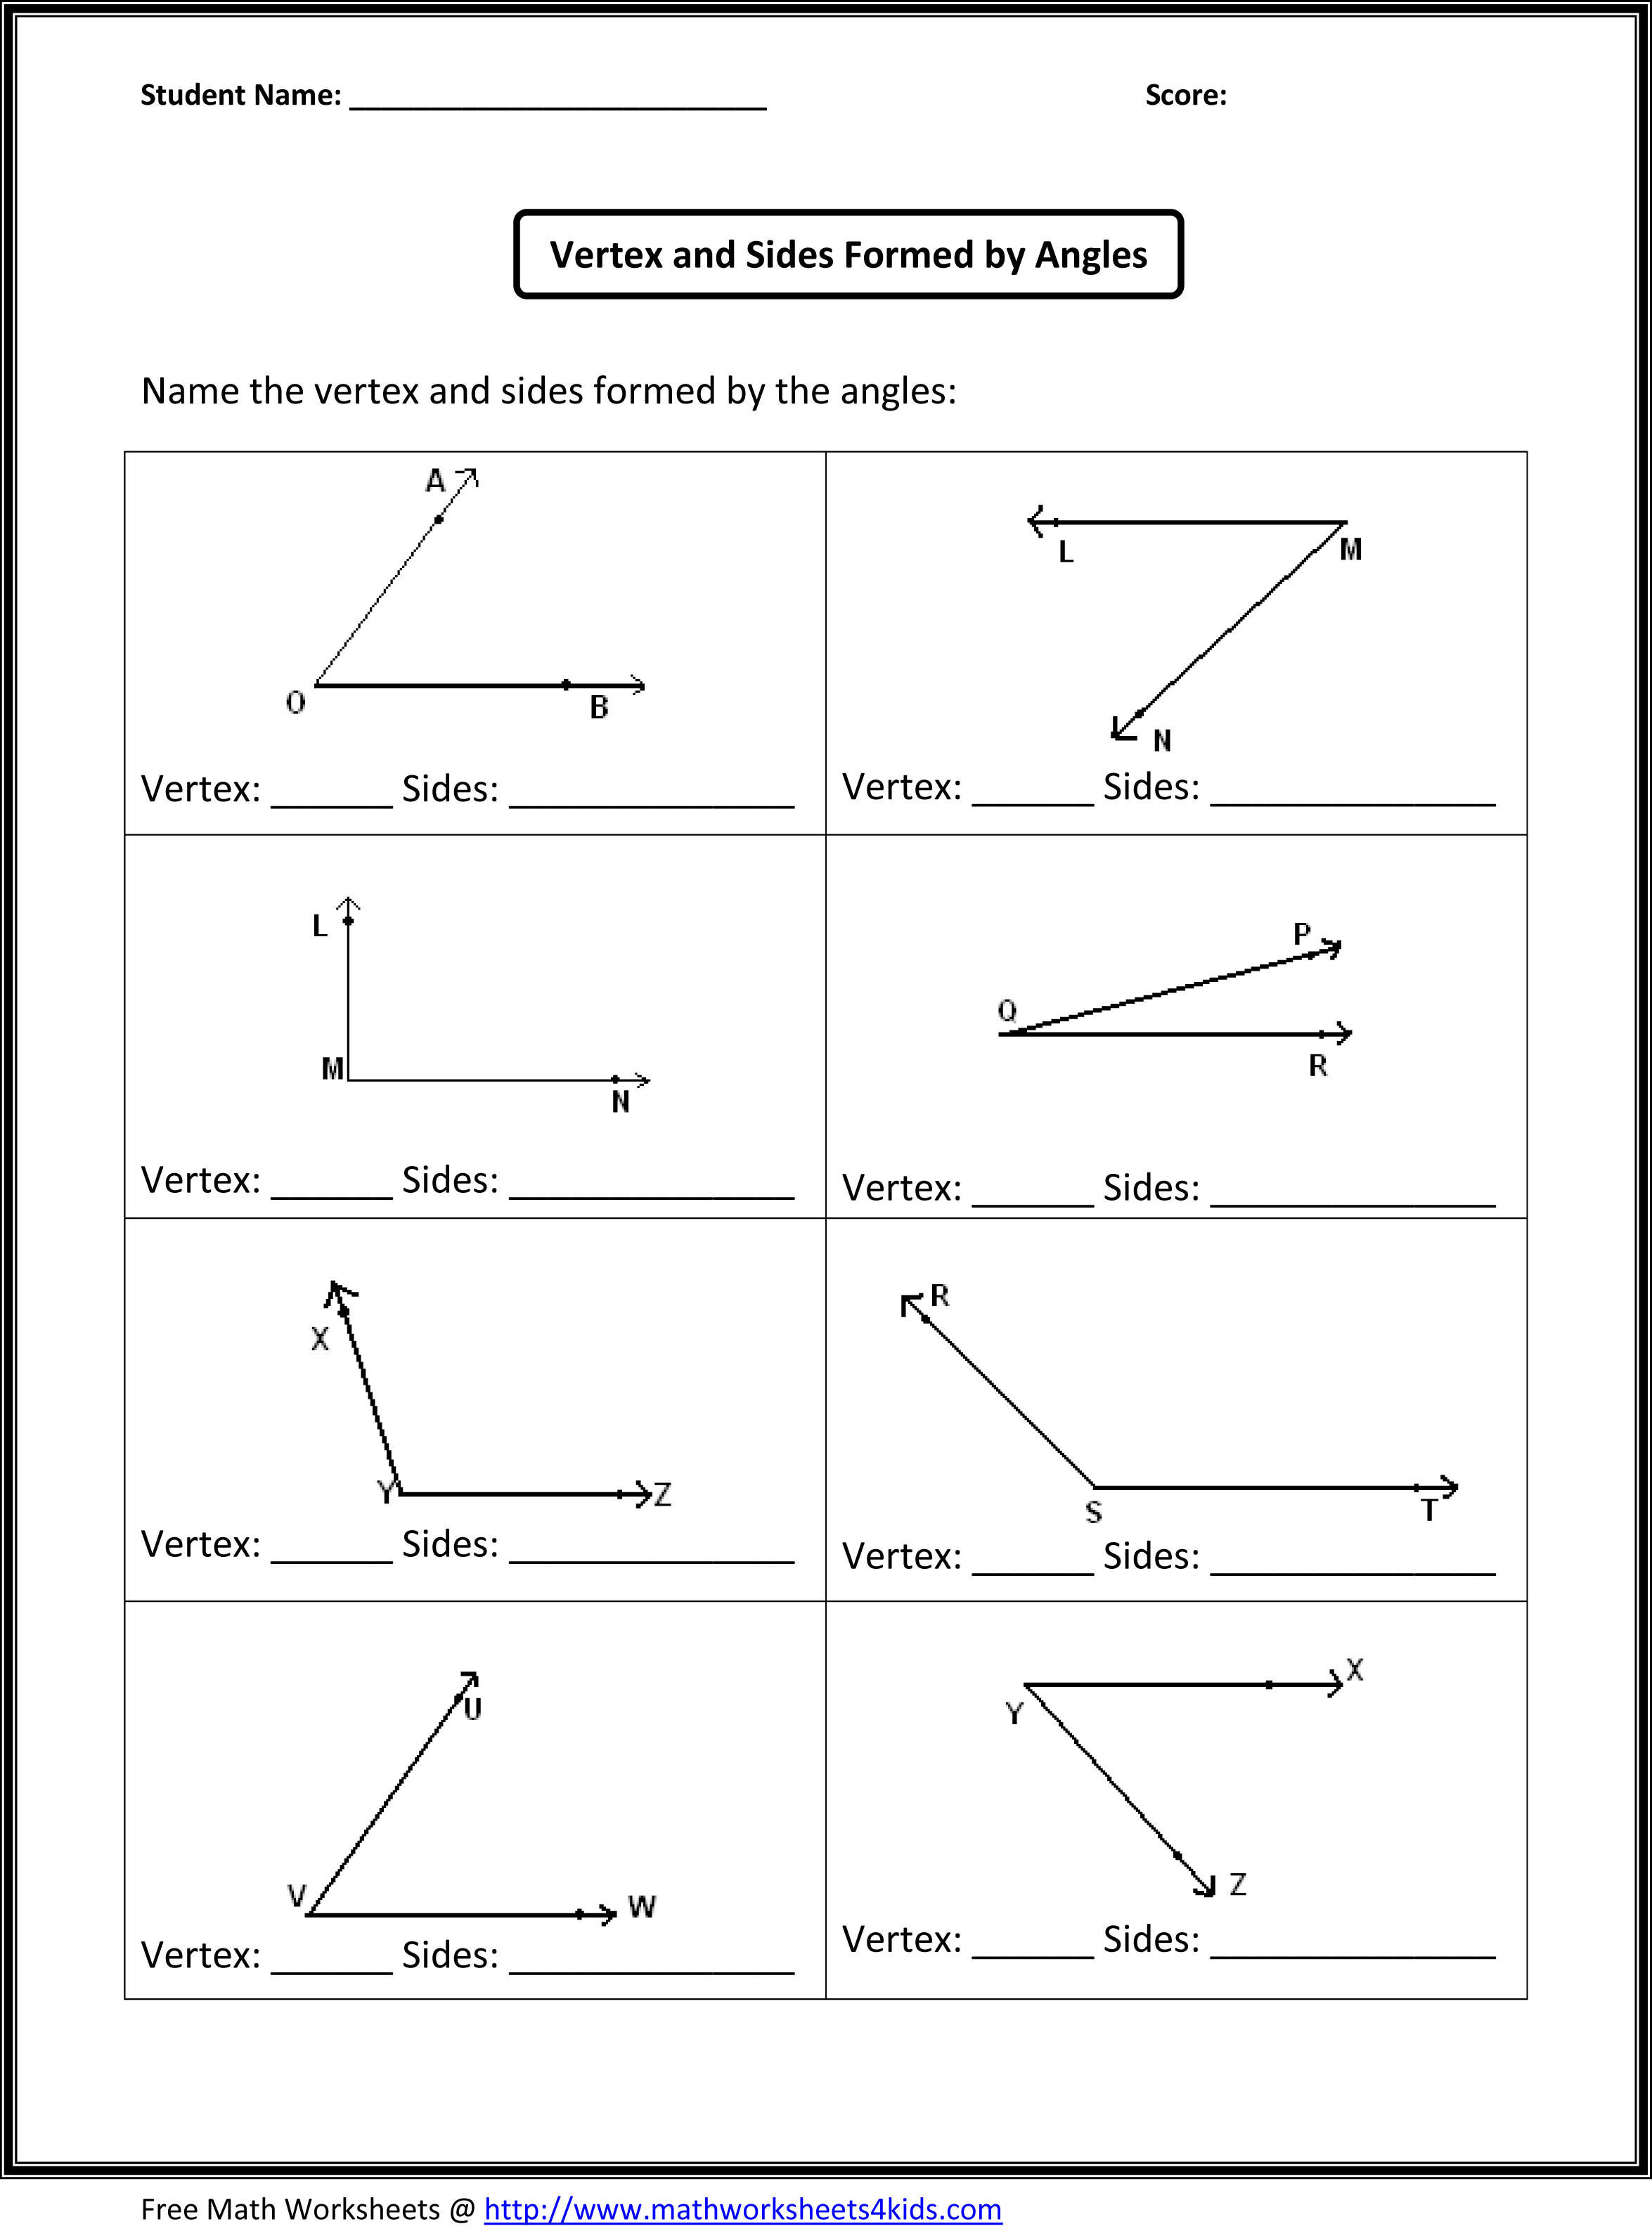 angles-worksheets-angles-math-angles-worksheet-geometry-worksheets